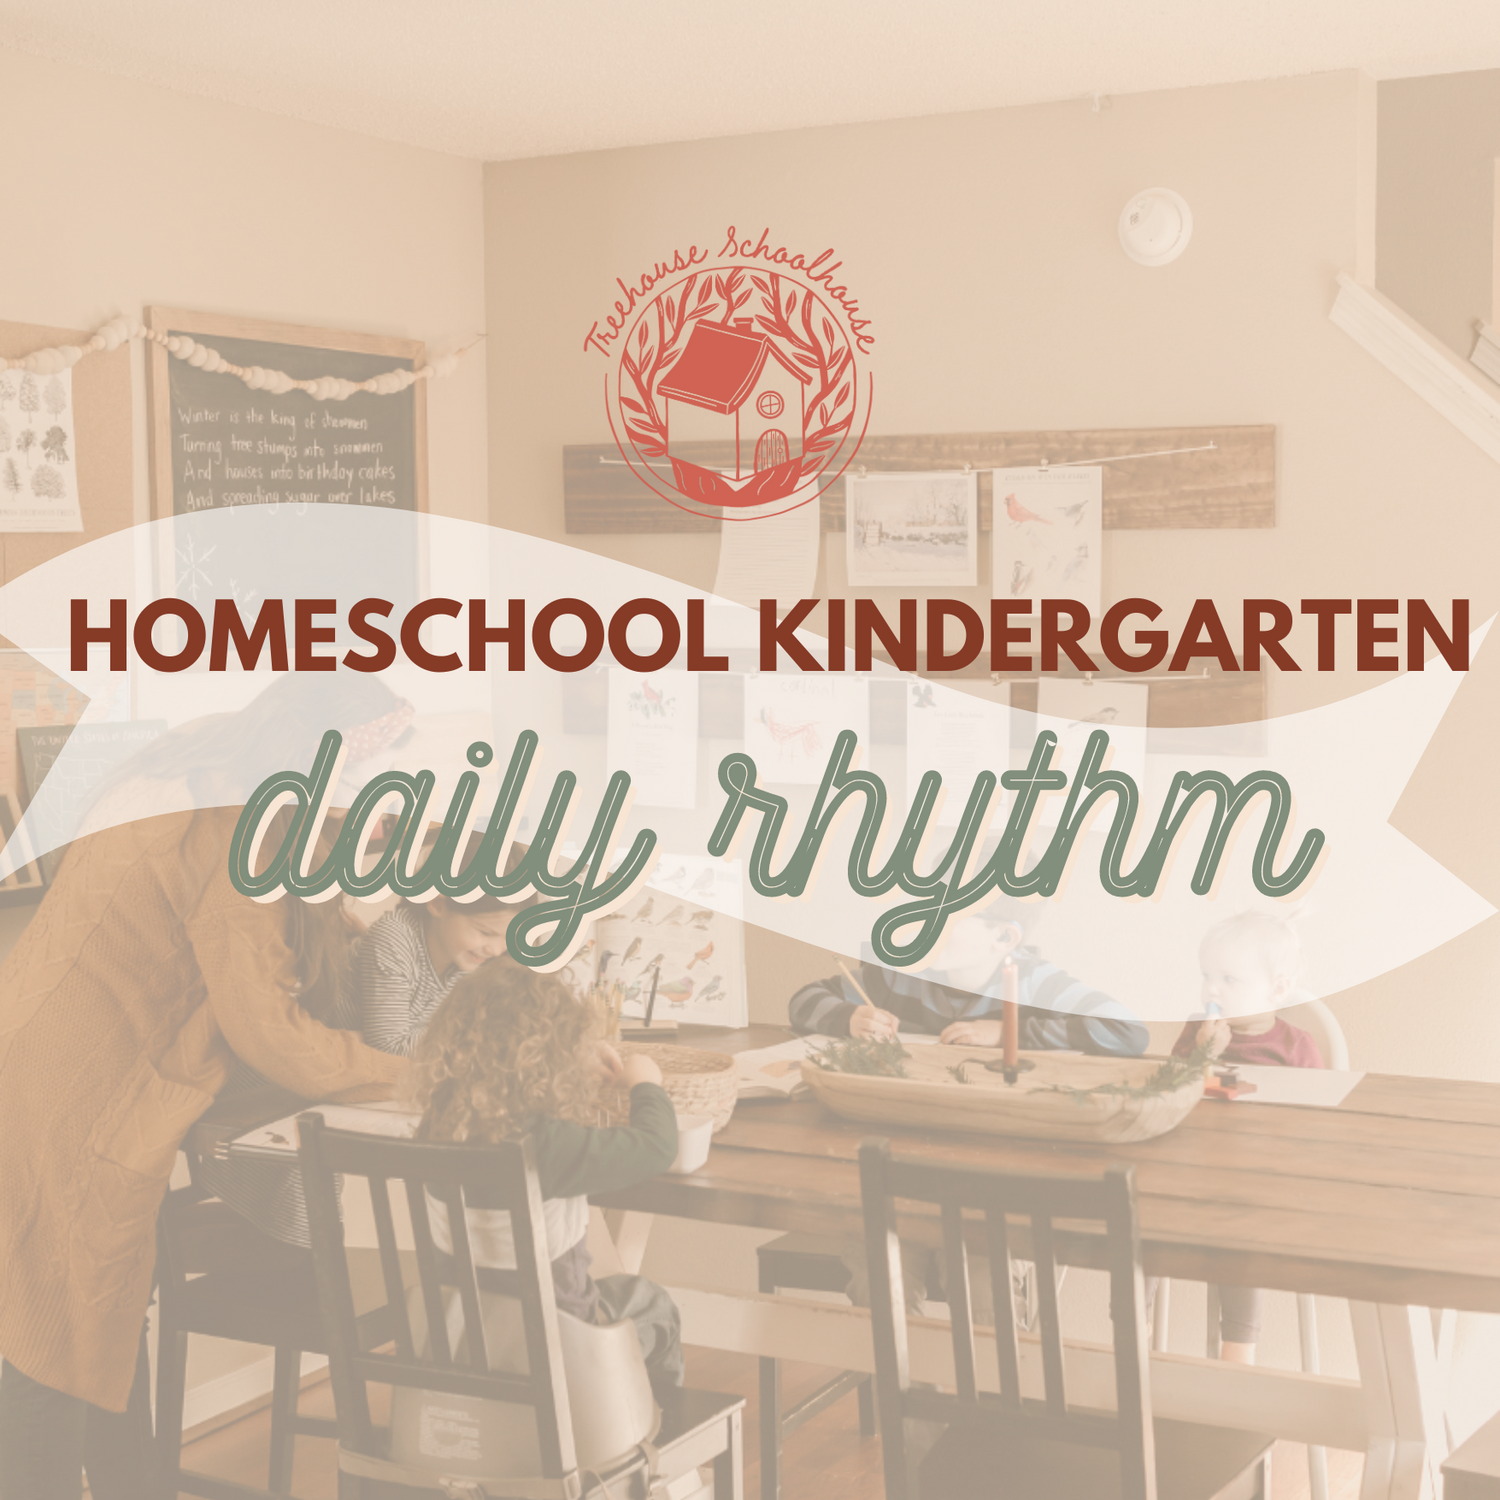 Homeschool Kindergarten: Daily Rhythm, Schedule, and Curriculum